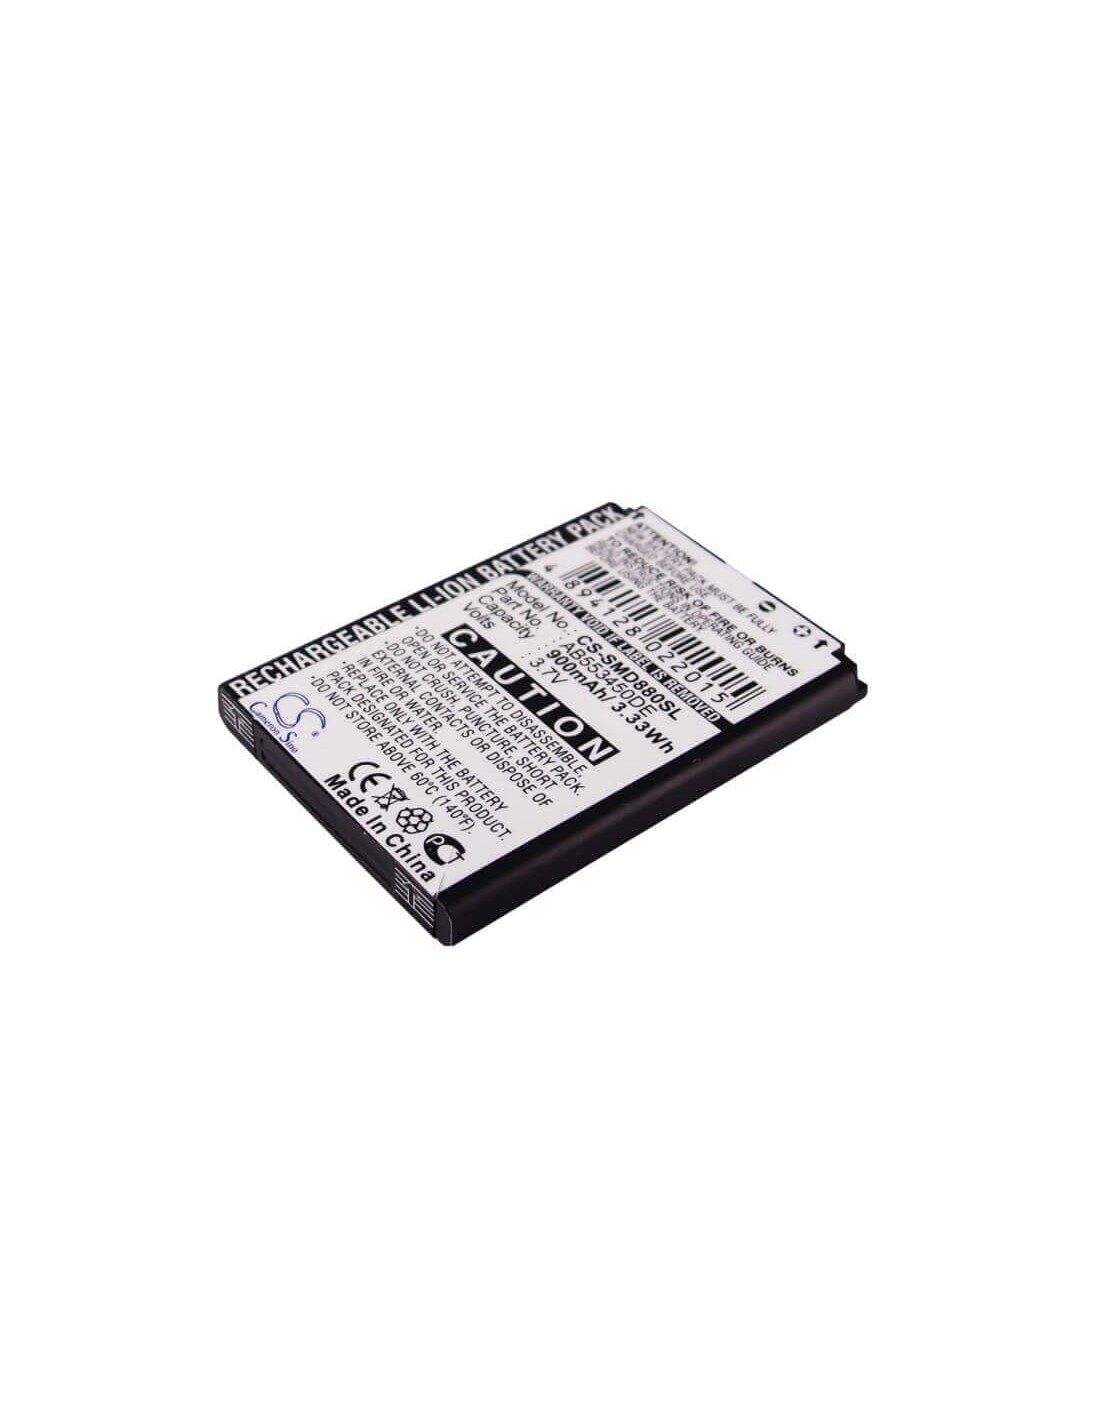 Battery for Samsung SGH-D880, SGH-D880i, SGH-D888 3.7V, 900mAh - 3.33Wh